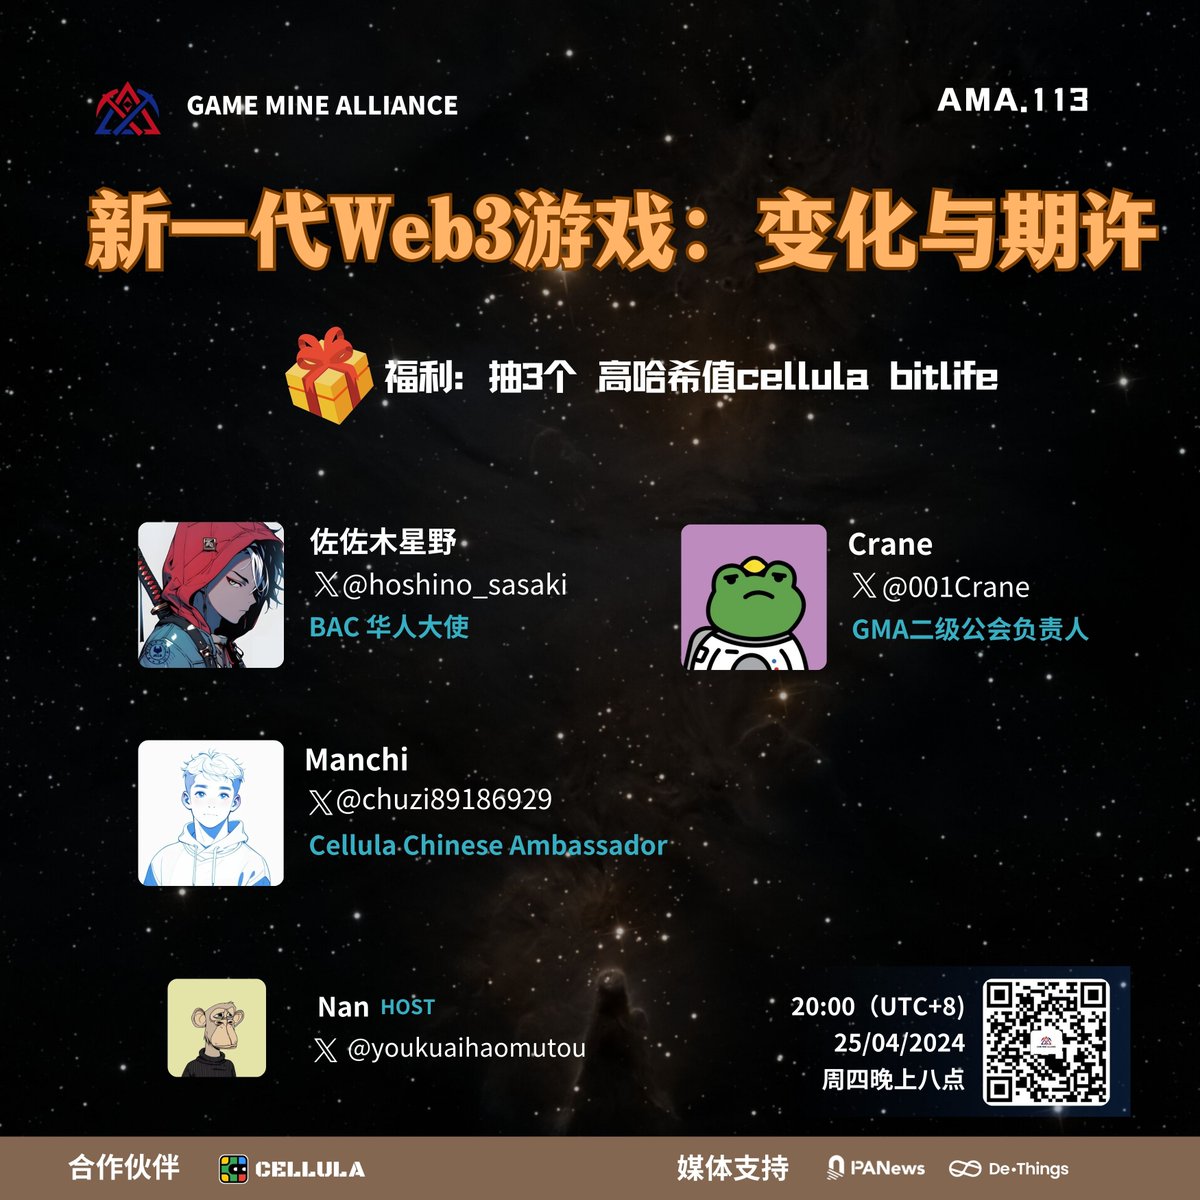 📢📢GMA 113期 AMA： 《新一代Web3游戏：变化与期许》 ⏰20:00（UTC+8）2024年4月25日（周四） 🔗Space：x.com/i/spaces/1mnxe… 🎁 3个高哈希值 Cellula BitLife 🎙️嘉宾 佐佐木星野：BAC 华人大使 推特 @hoshino_sasaki Crane：GMA二级公会负责人 推特 @001Crane Manchi： Cellula Chinese…